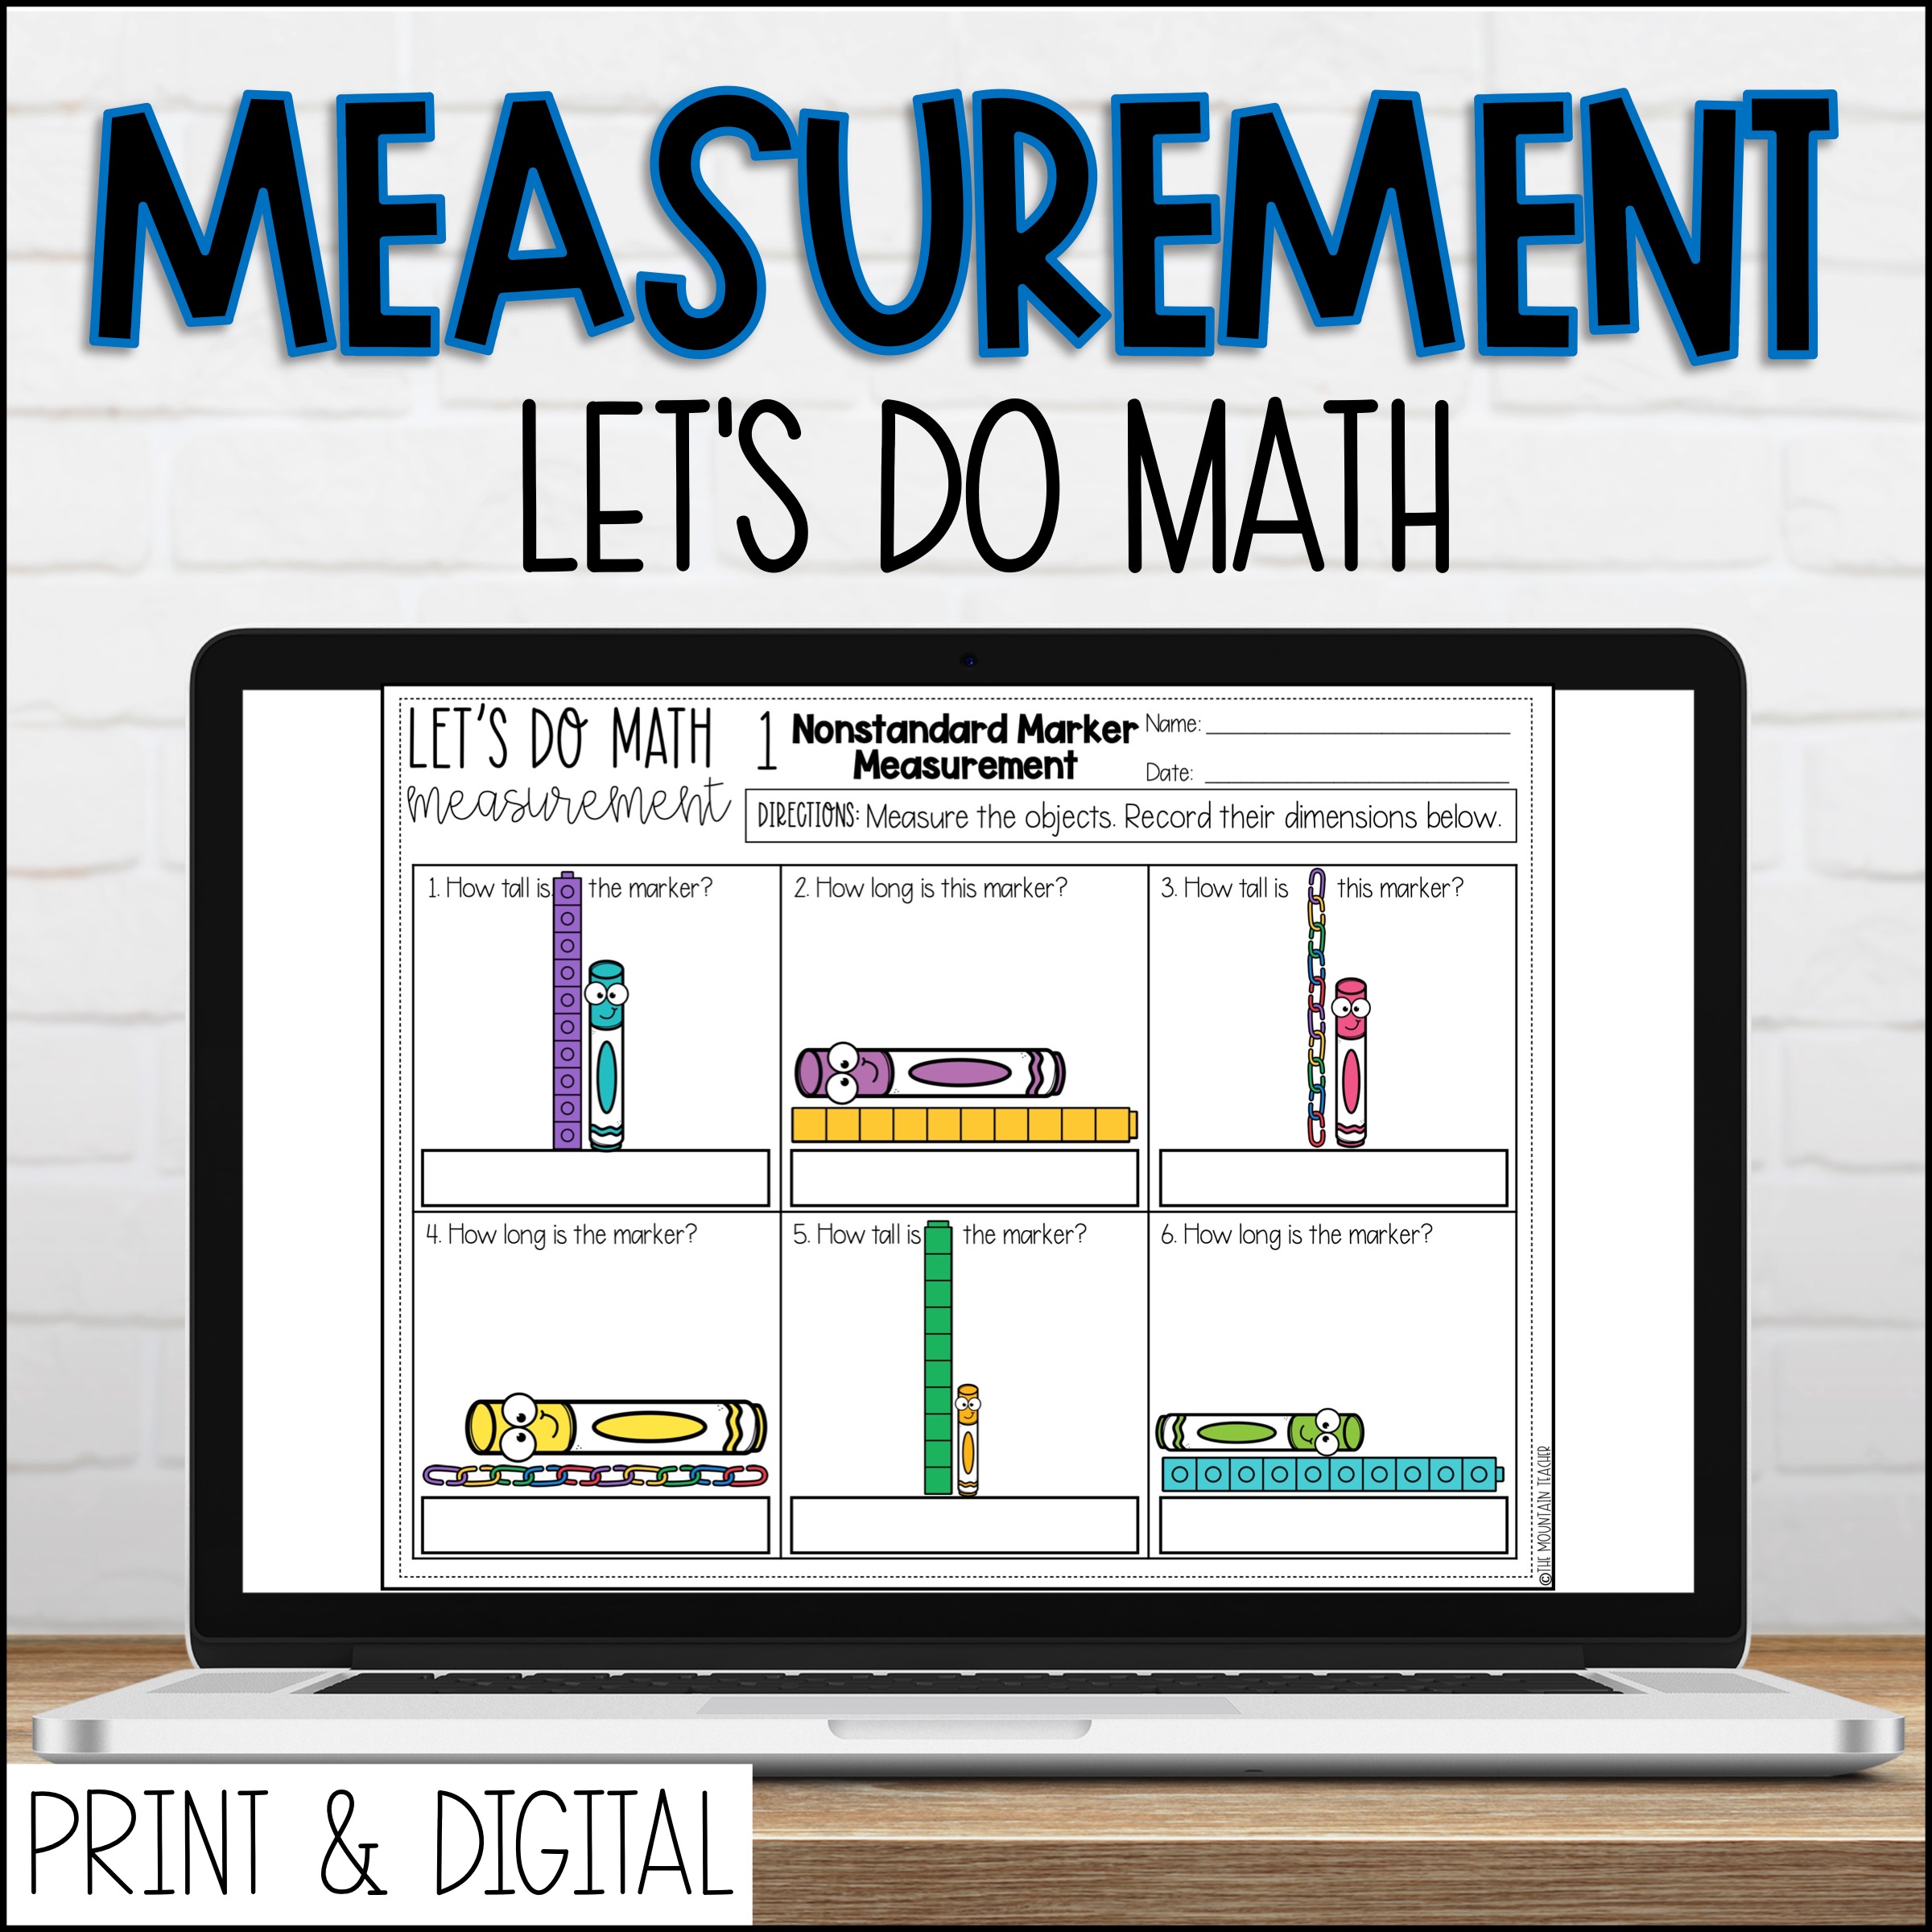 DIGITAL Lets Do Math No Prep 2nd Grade MEASUREMENT Worksheets and Videos